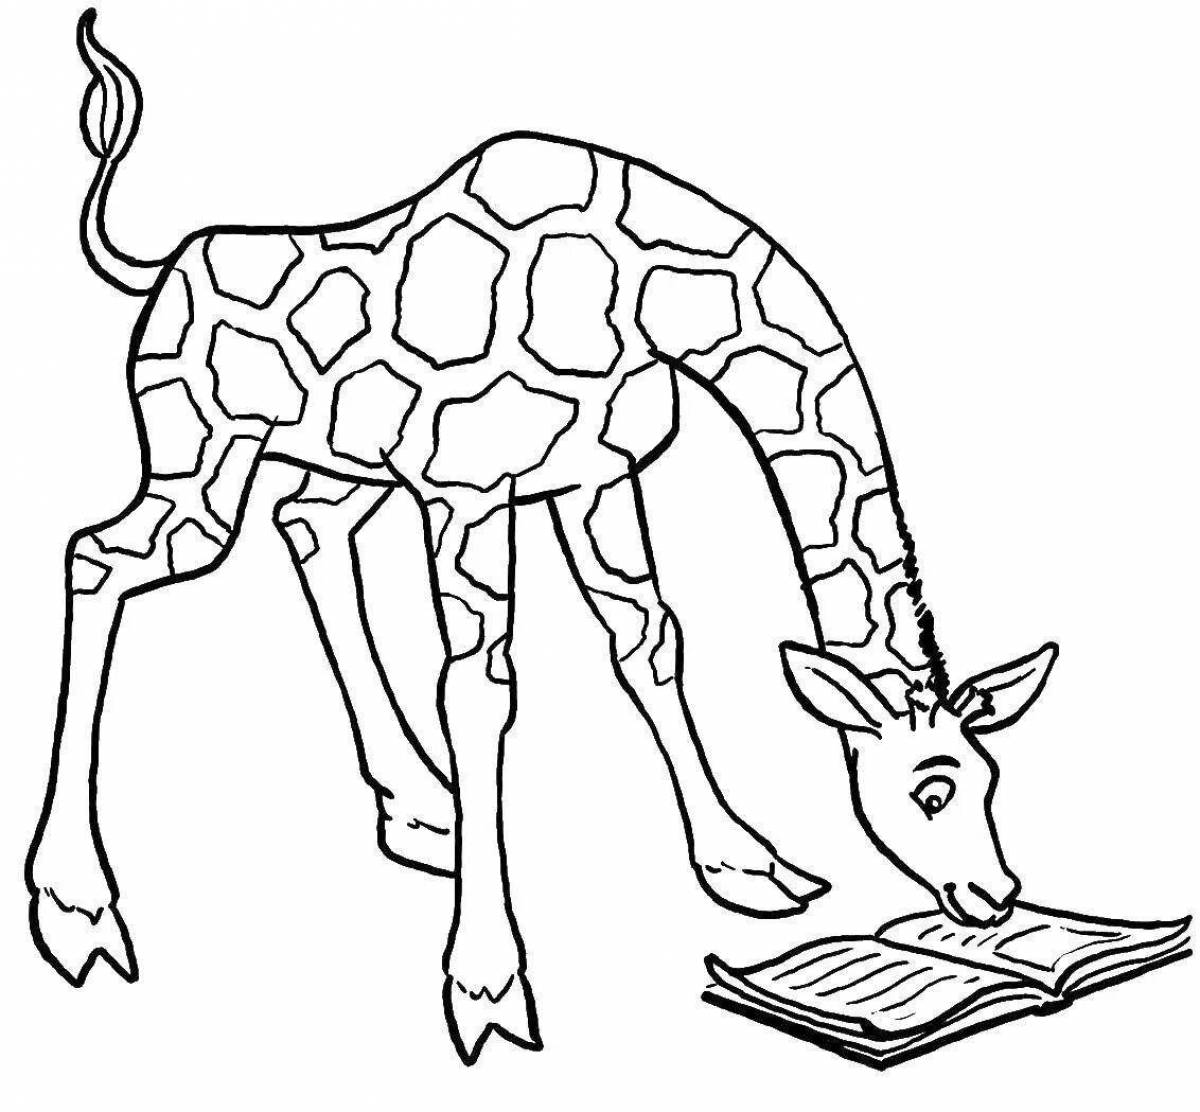 A fun giraffe coloring book for preschoolers